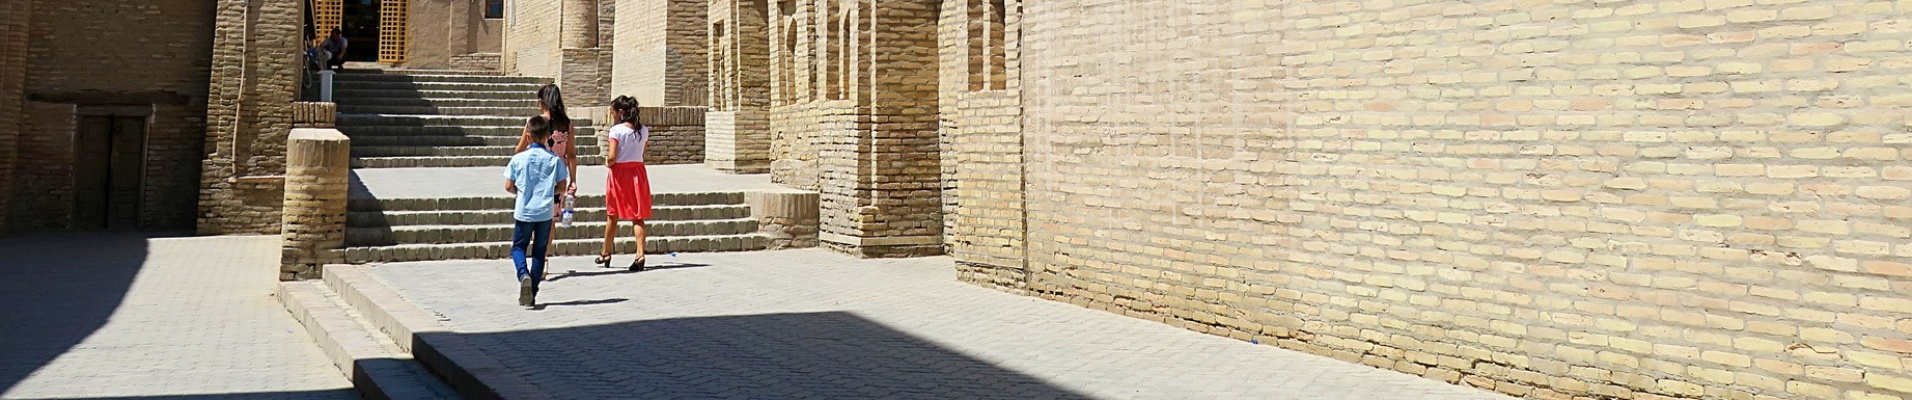 Ruelles de Khiva, Ouzbékistan